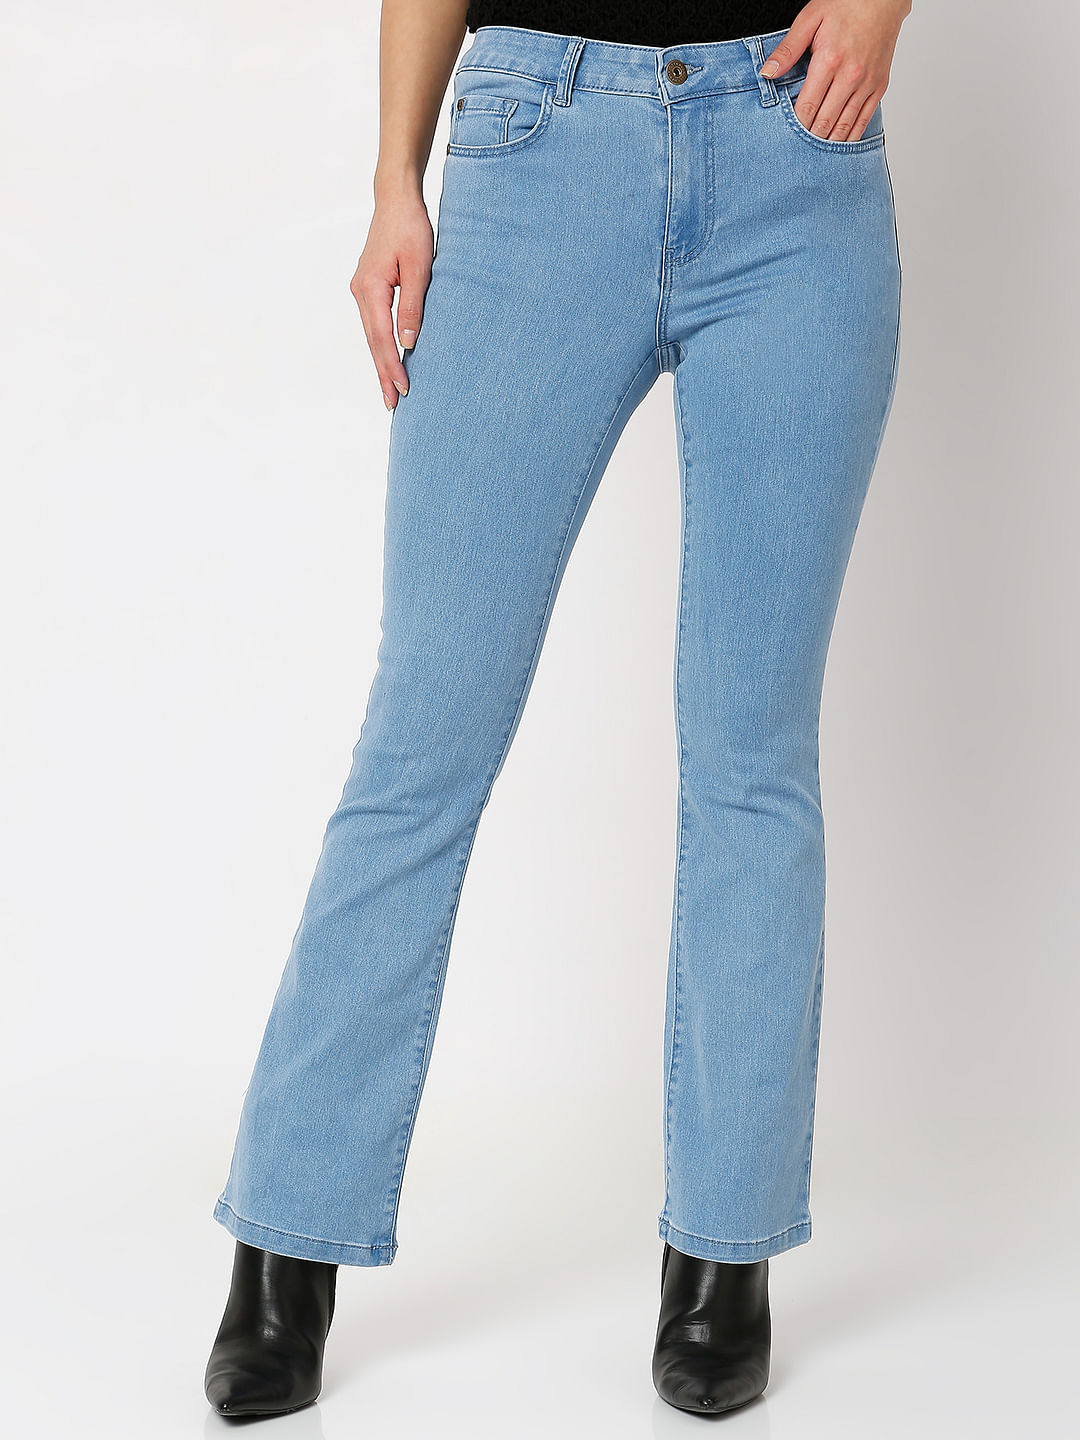 Buy Blue Jeans for Men by The Indian Garage Co Online  Ajiocom